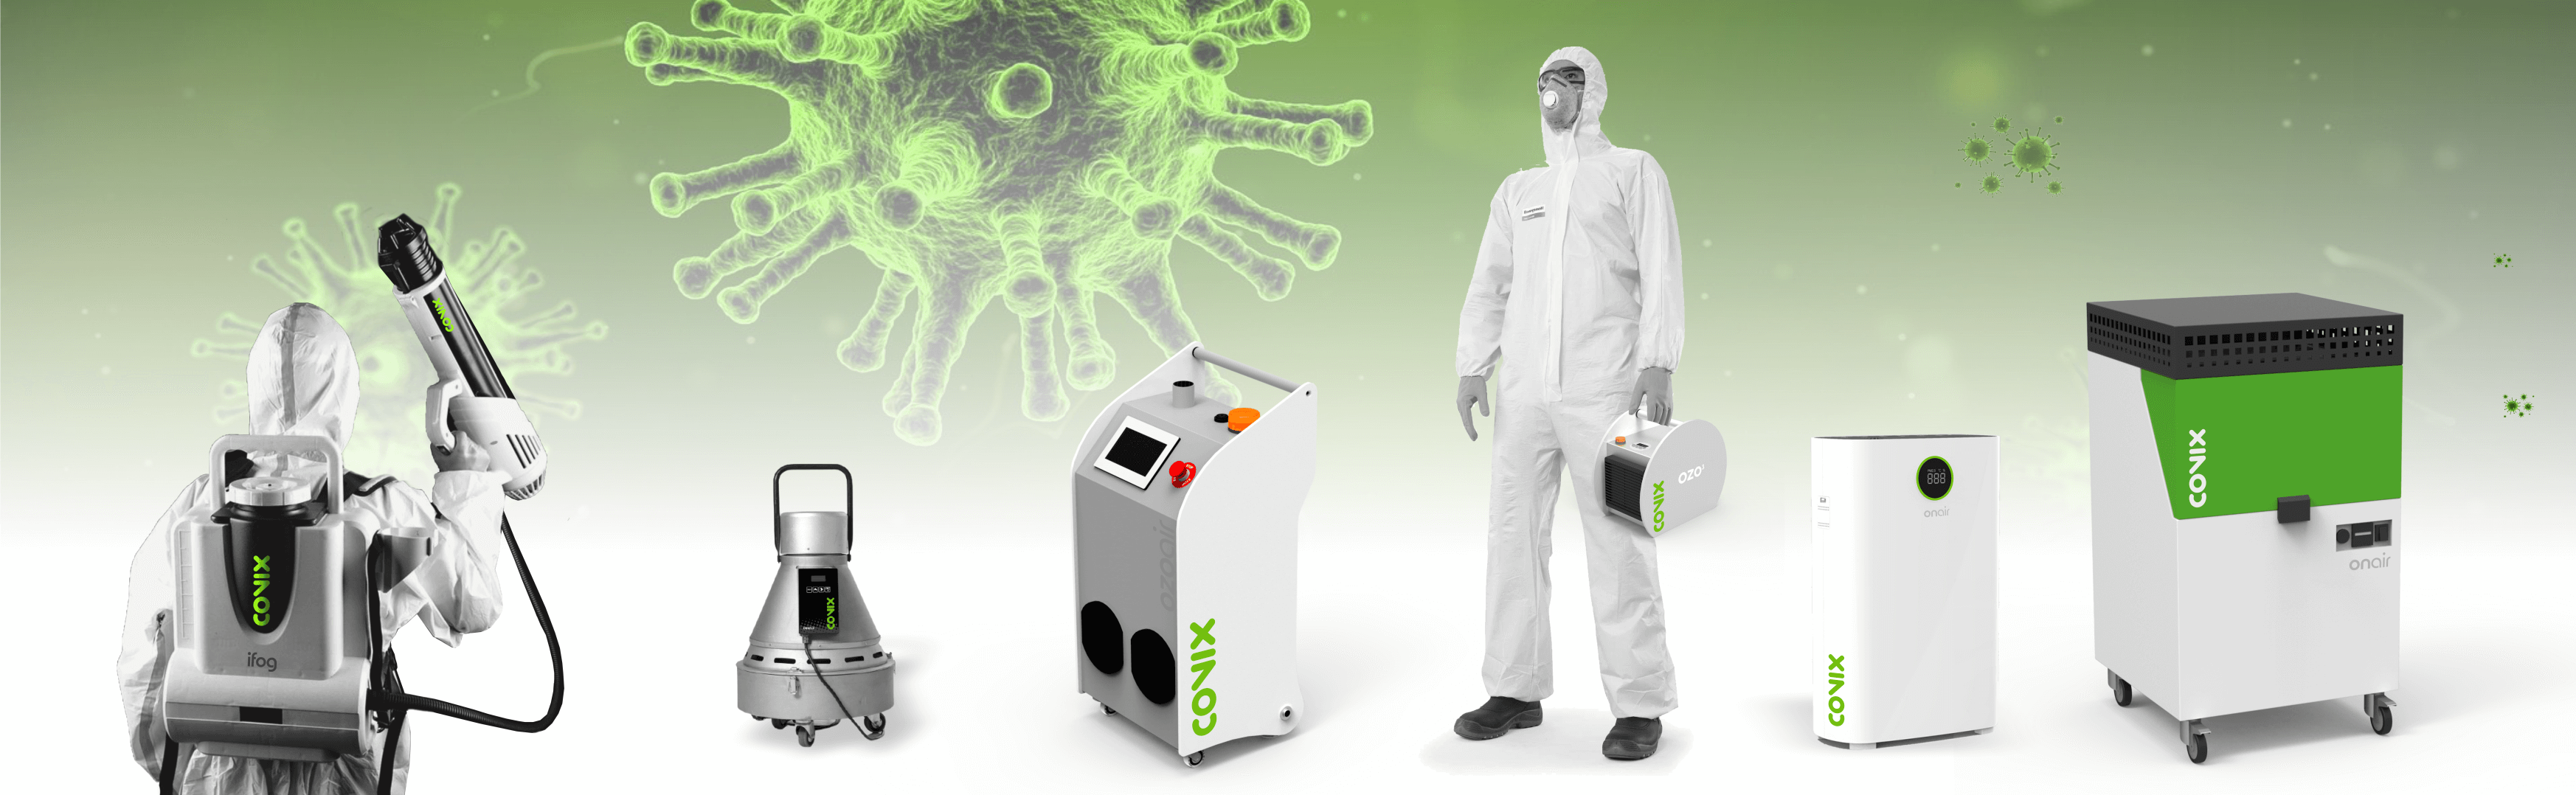 virus disinfection equipment